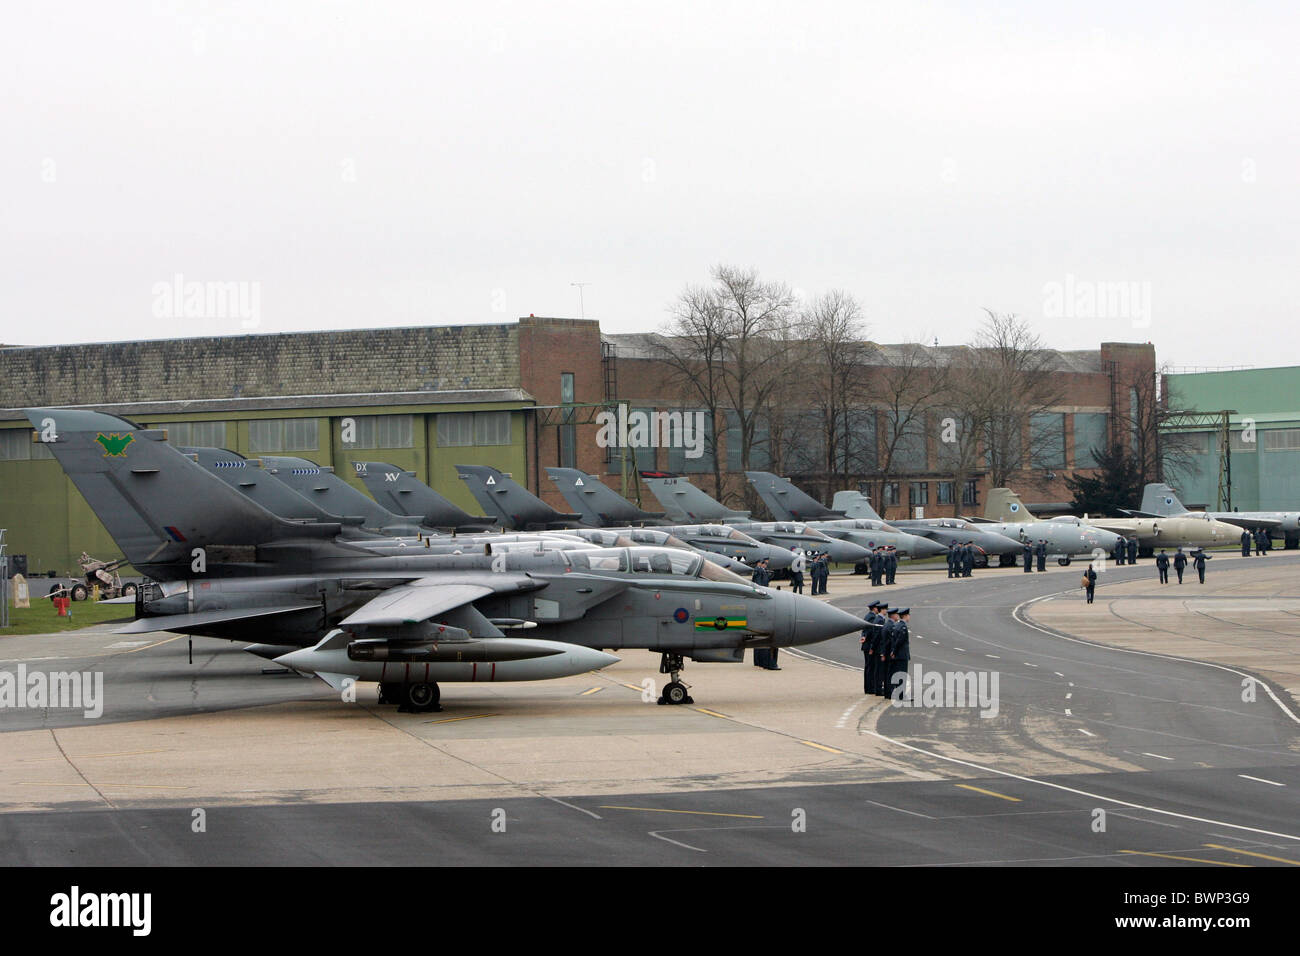 Marham Wing, GR4 Tornadoes on display at RAF Marham in Norfolk Stock Photo